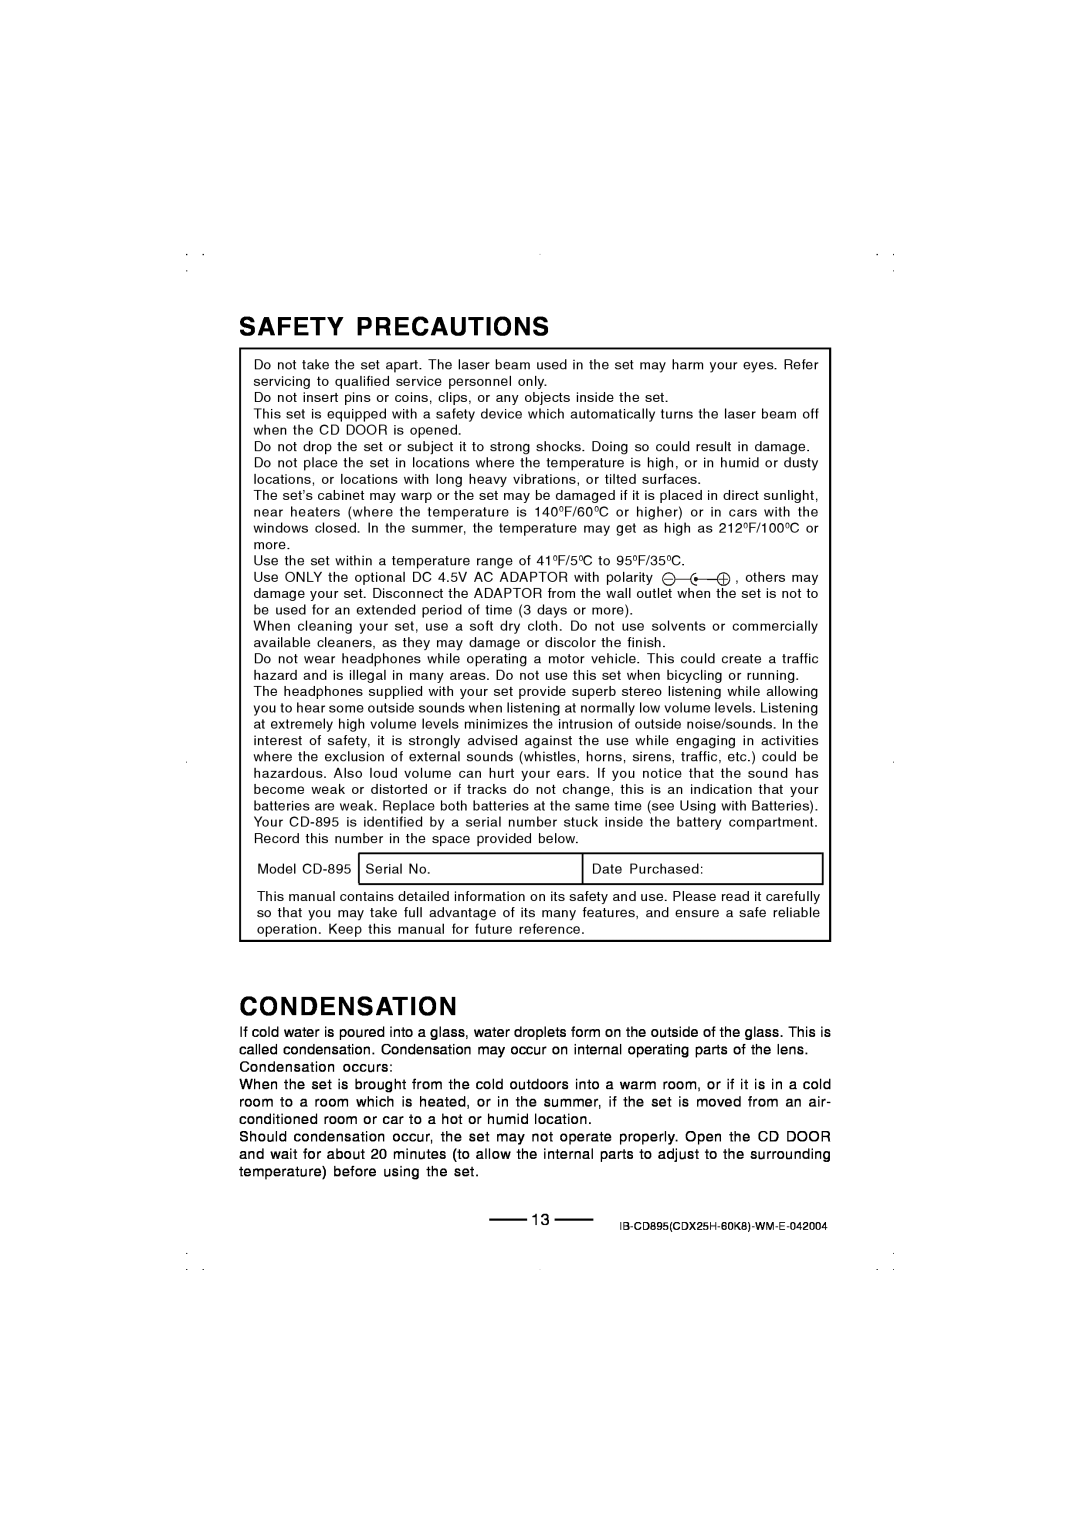 Lenoxx Electronics CD-895 manual Safety Precautions, Condensation 